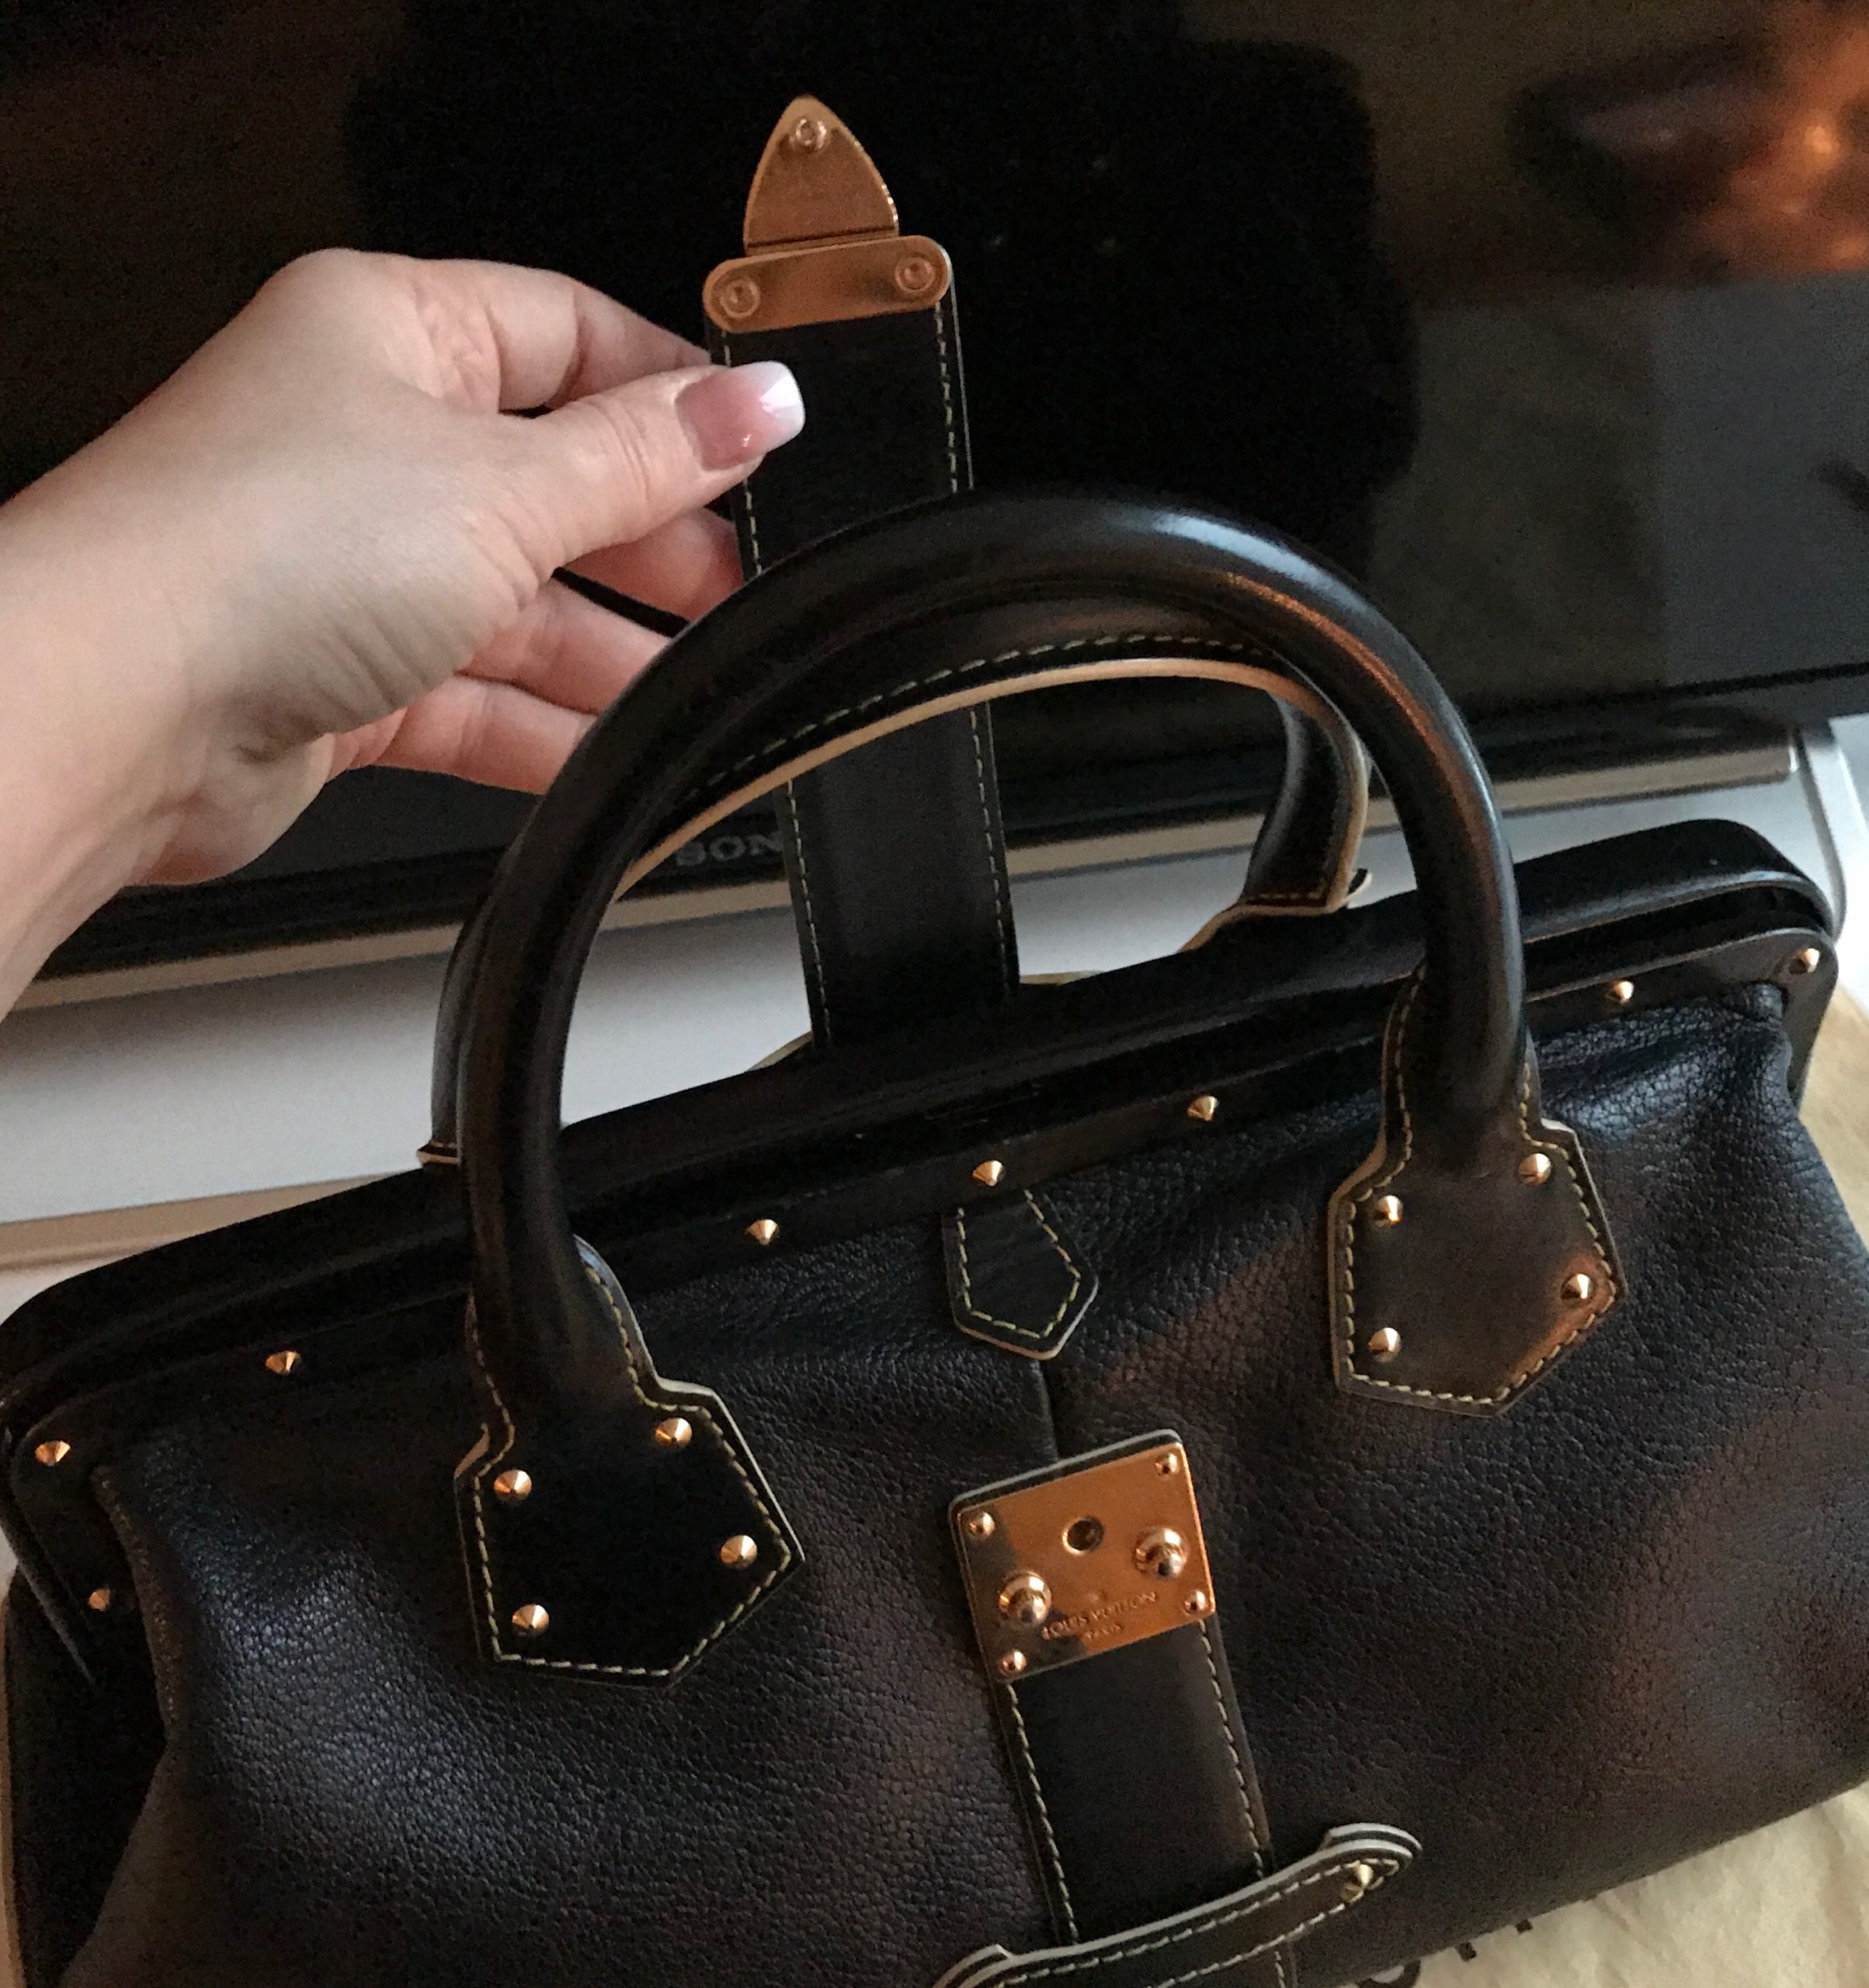 Christian Dior Denim Boston Bag  Rent Christian Dior Handbags for $55/month